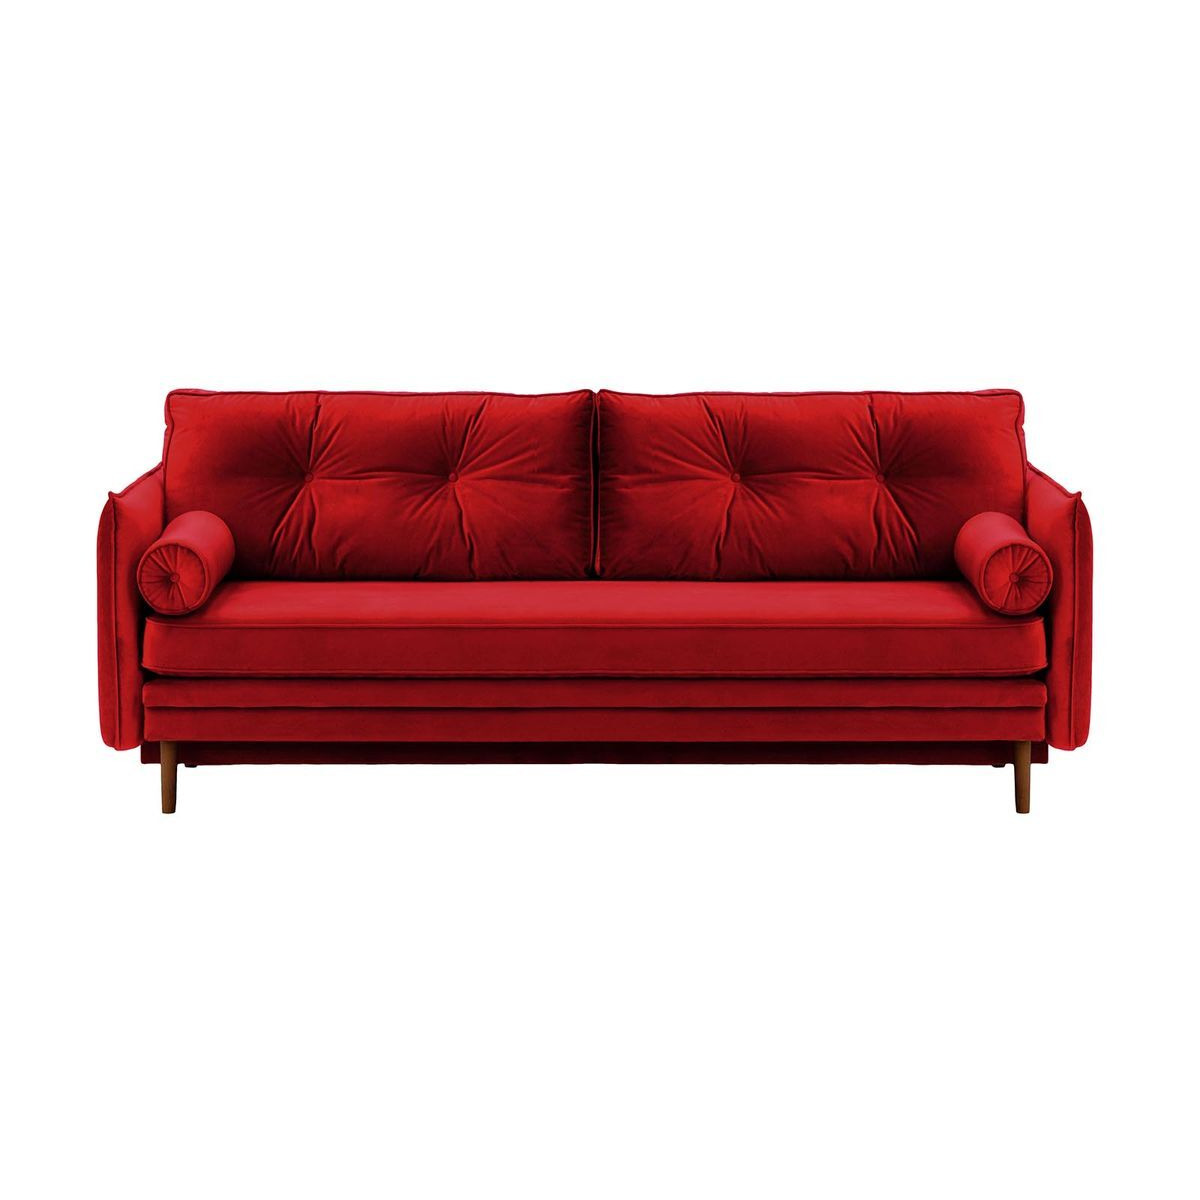 Darnet Sofa Bed with Storage, dark red, Leg colour: dark oak - image 1